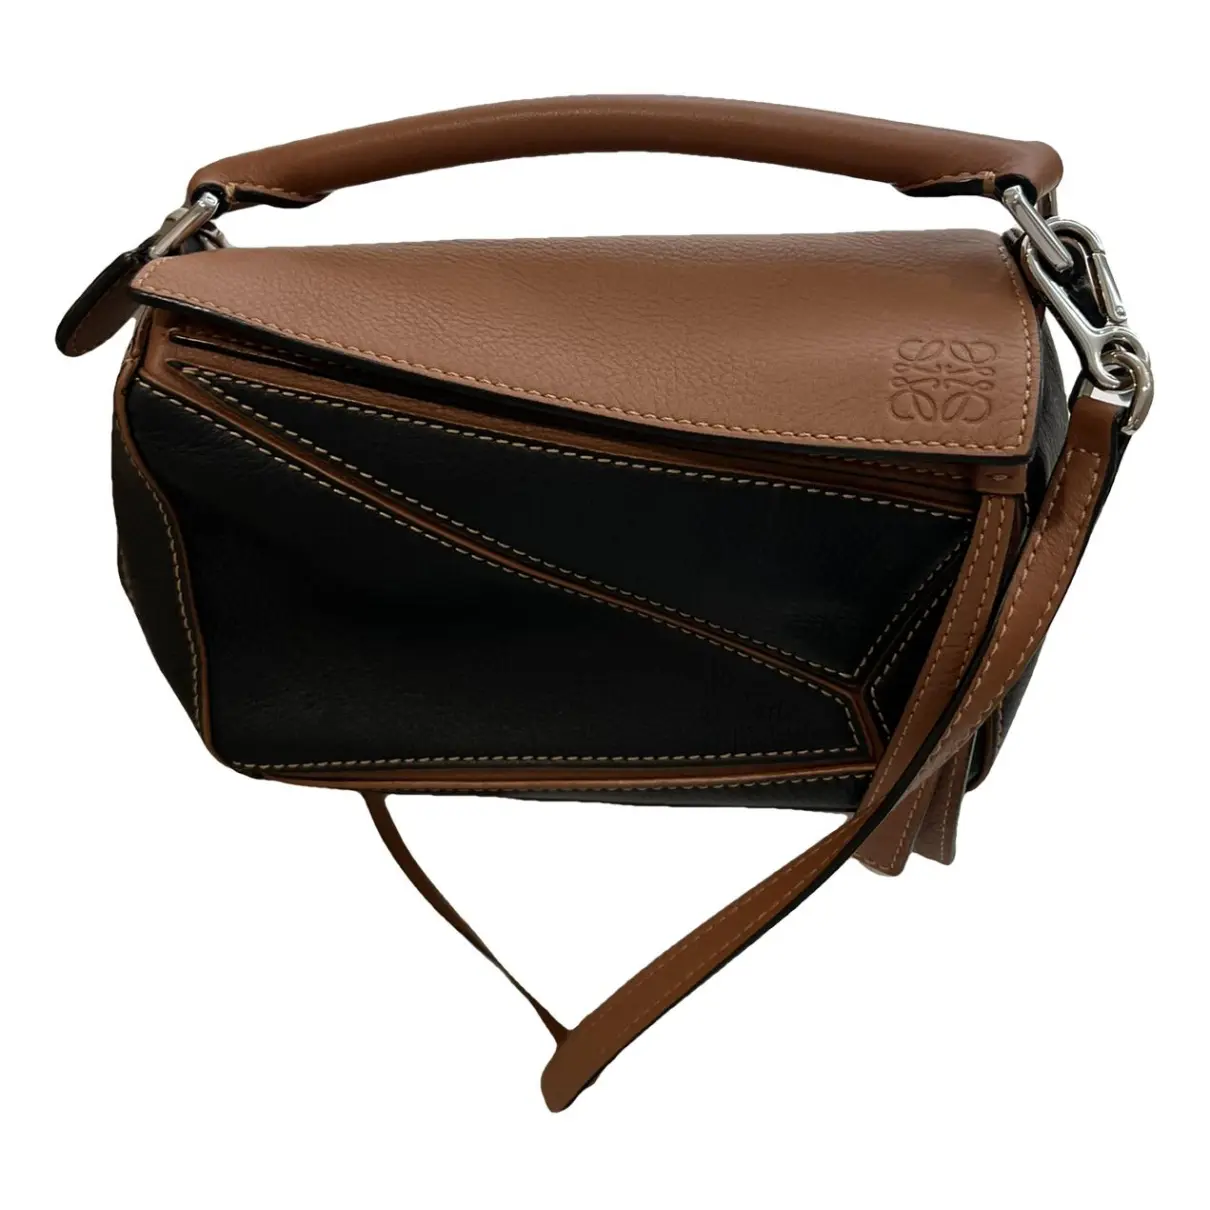 Puzzle leather handbag